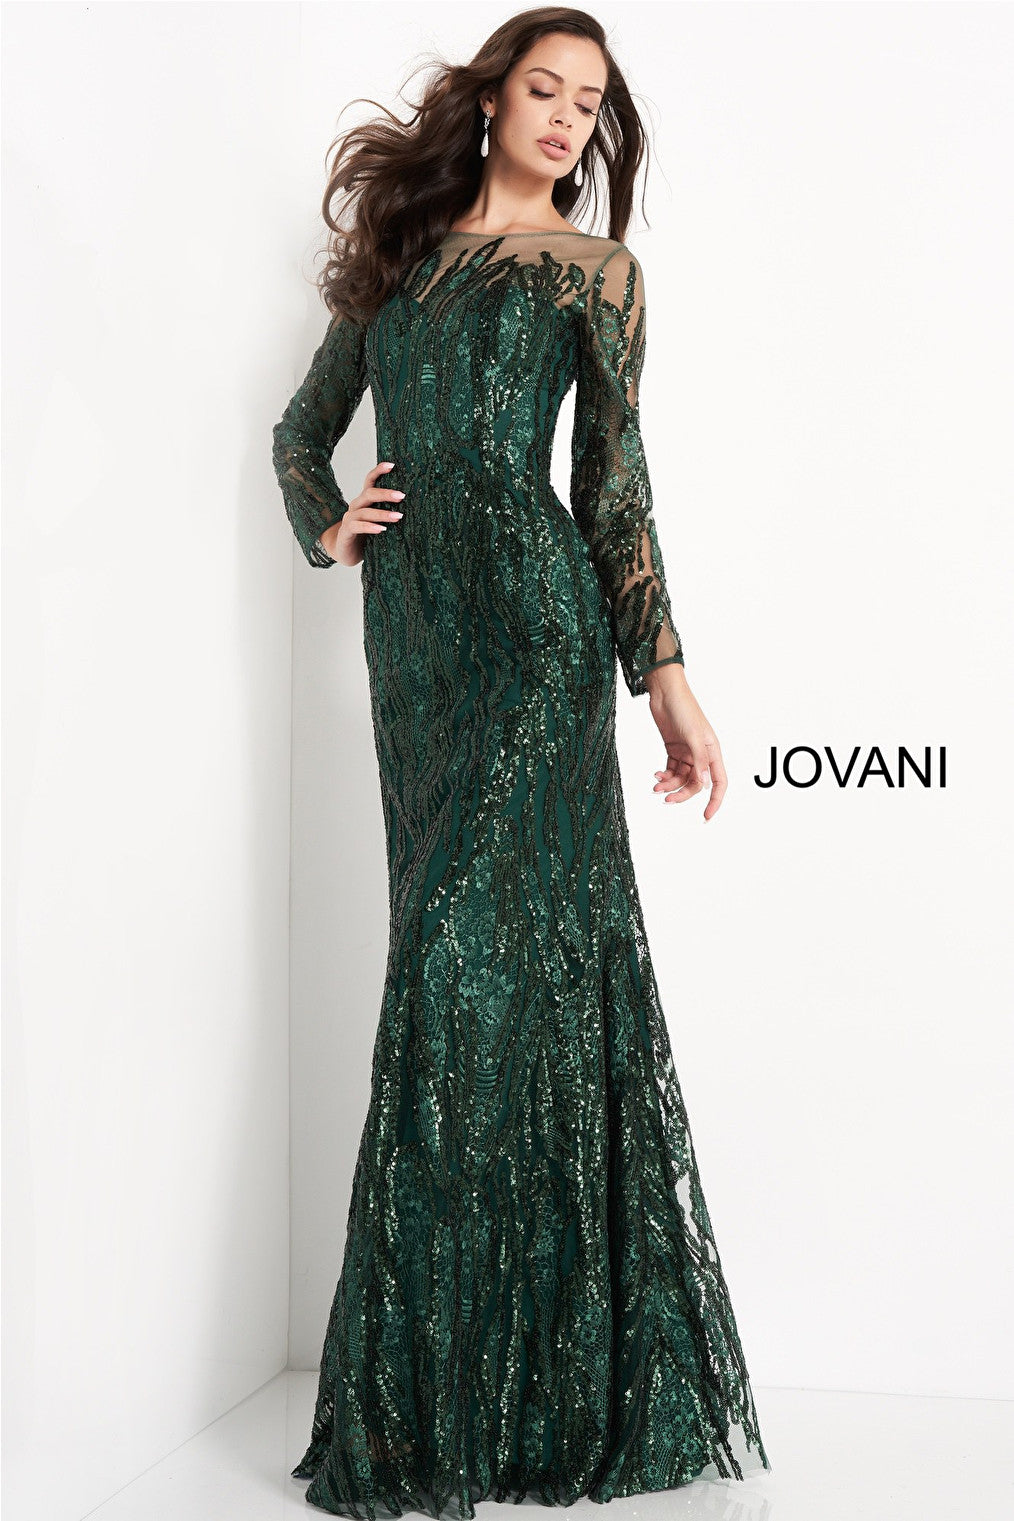 Dark green embellished evening Jovani dress 03936